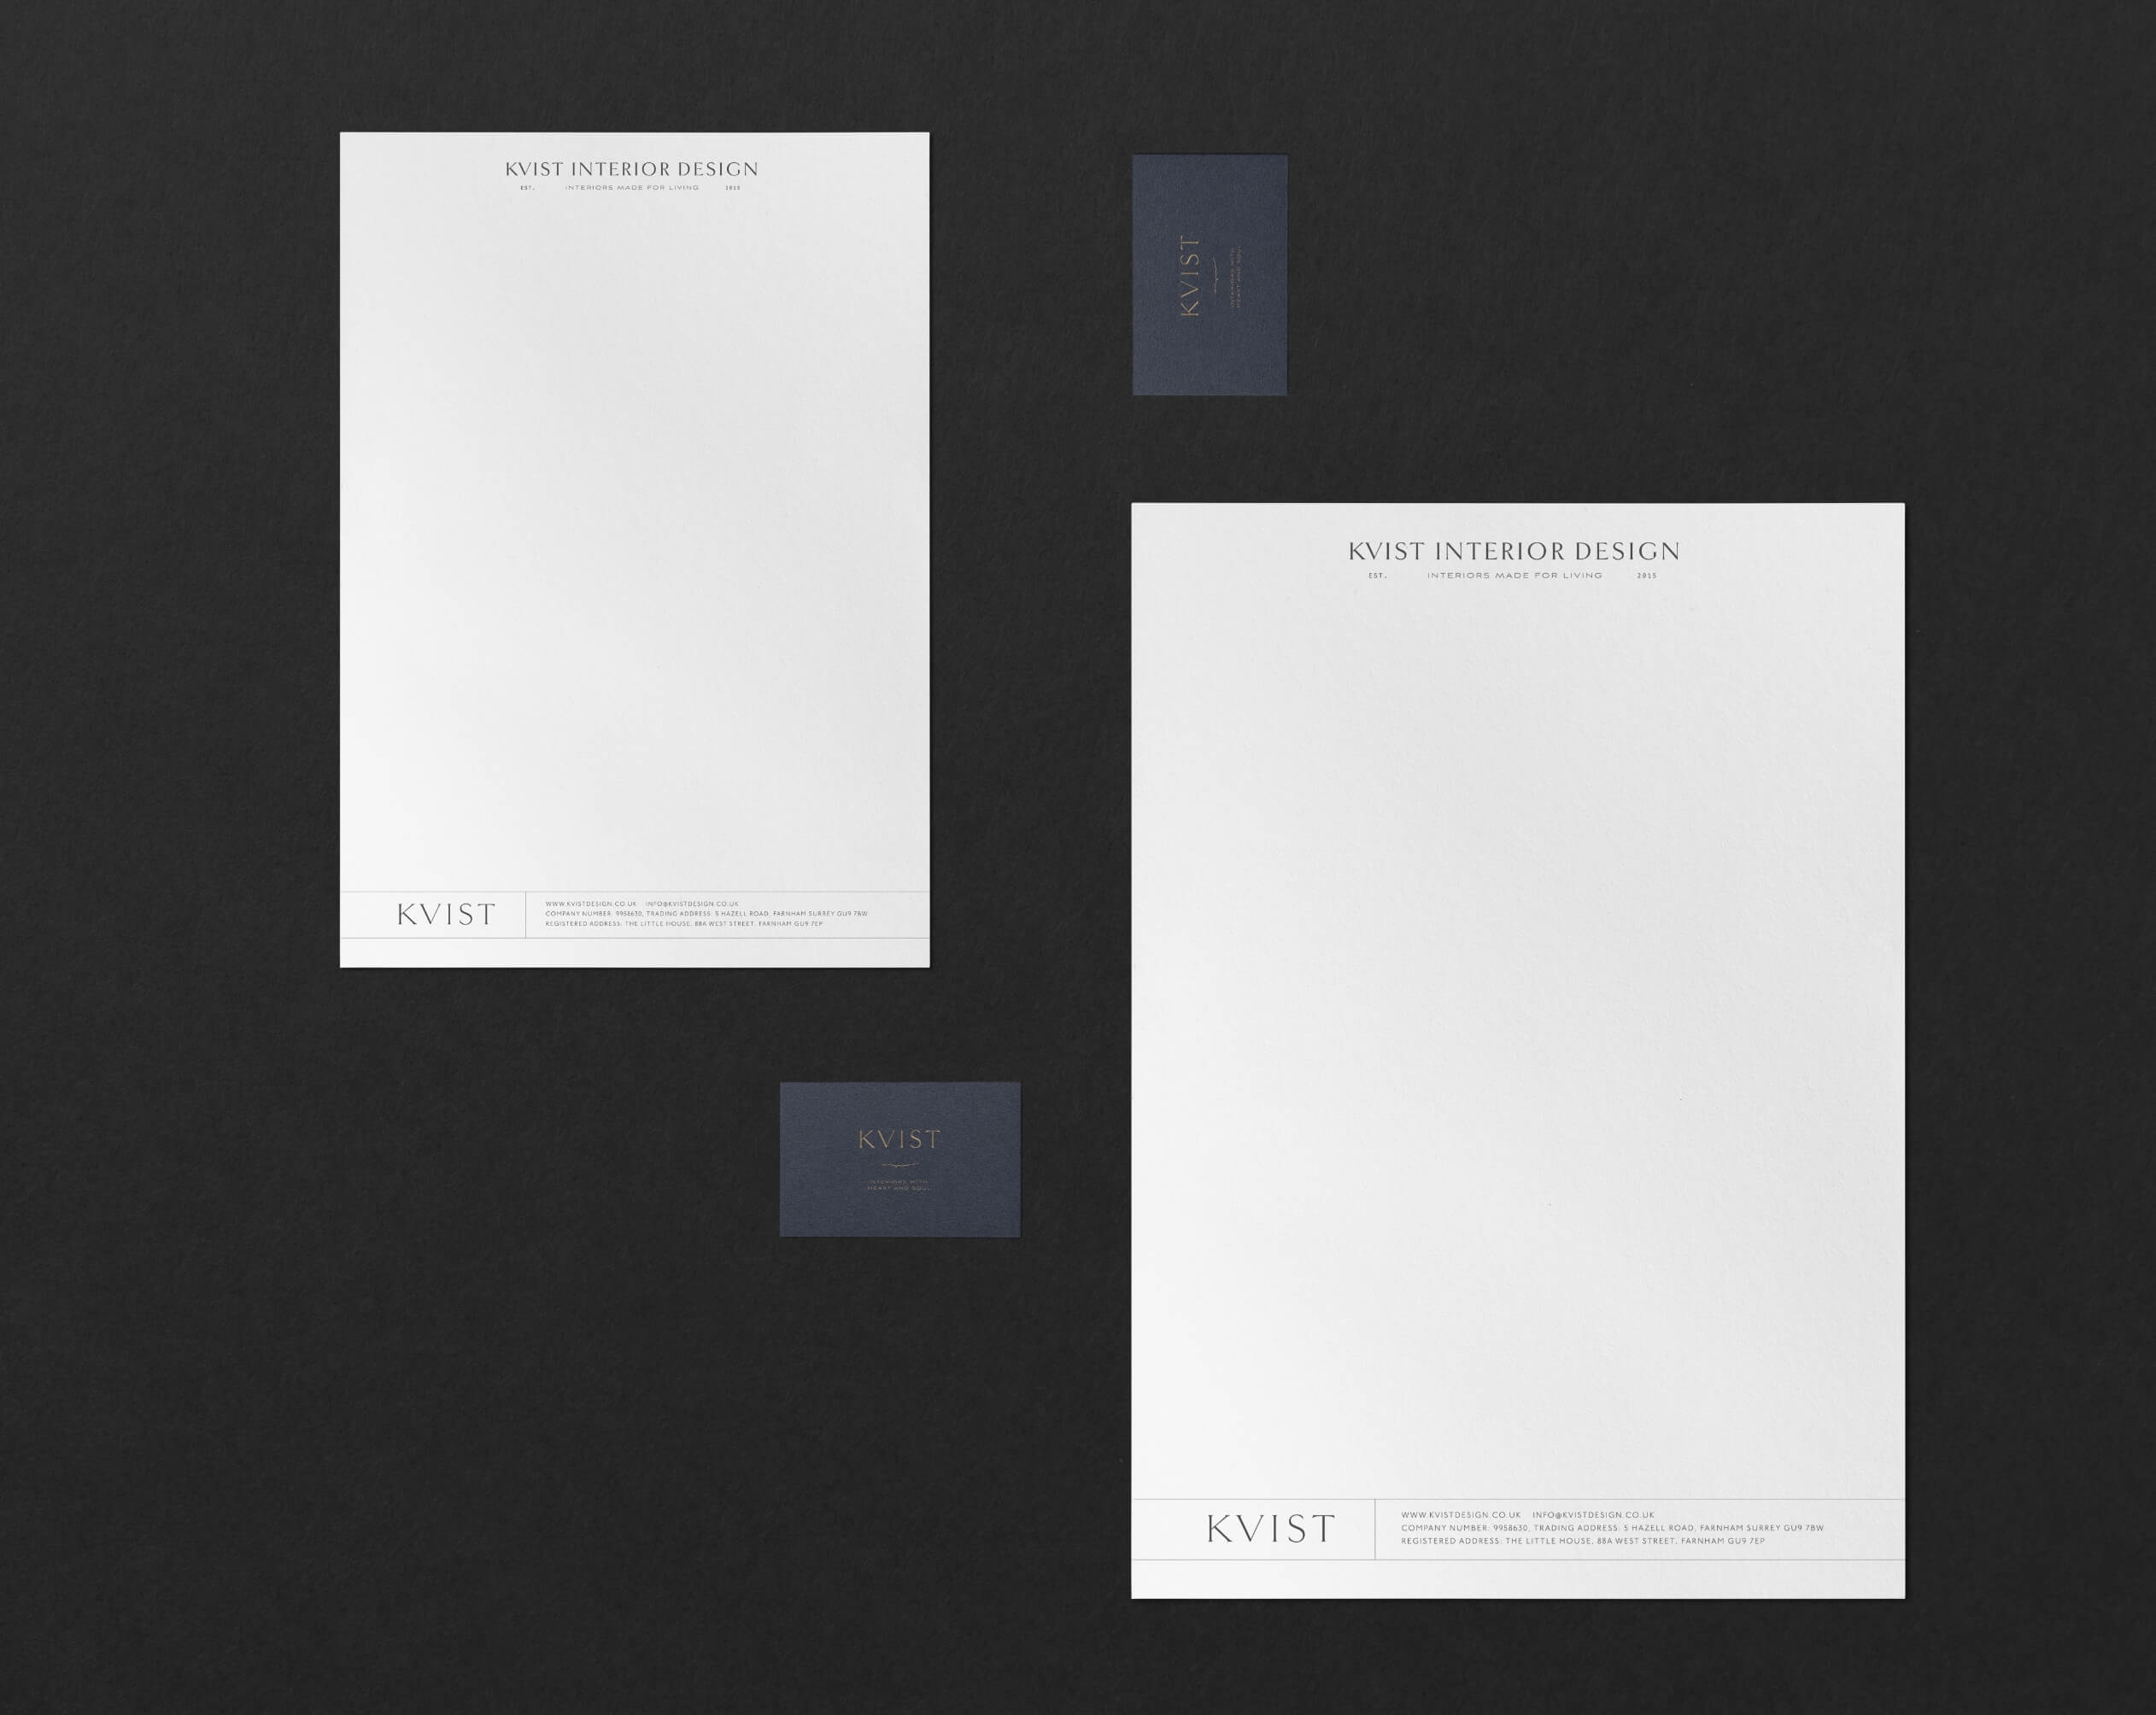 Brand stationery including letterhead and business card for KVIST interior design brand